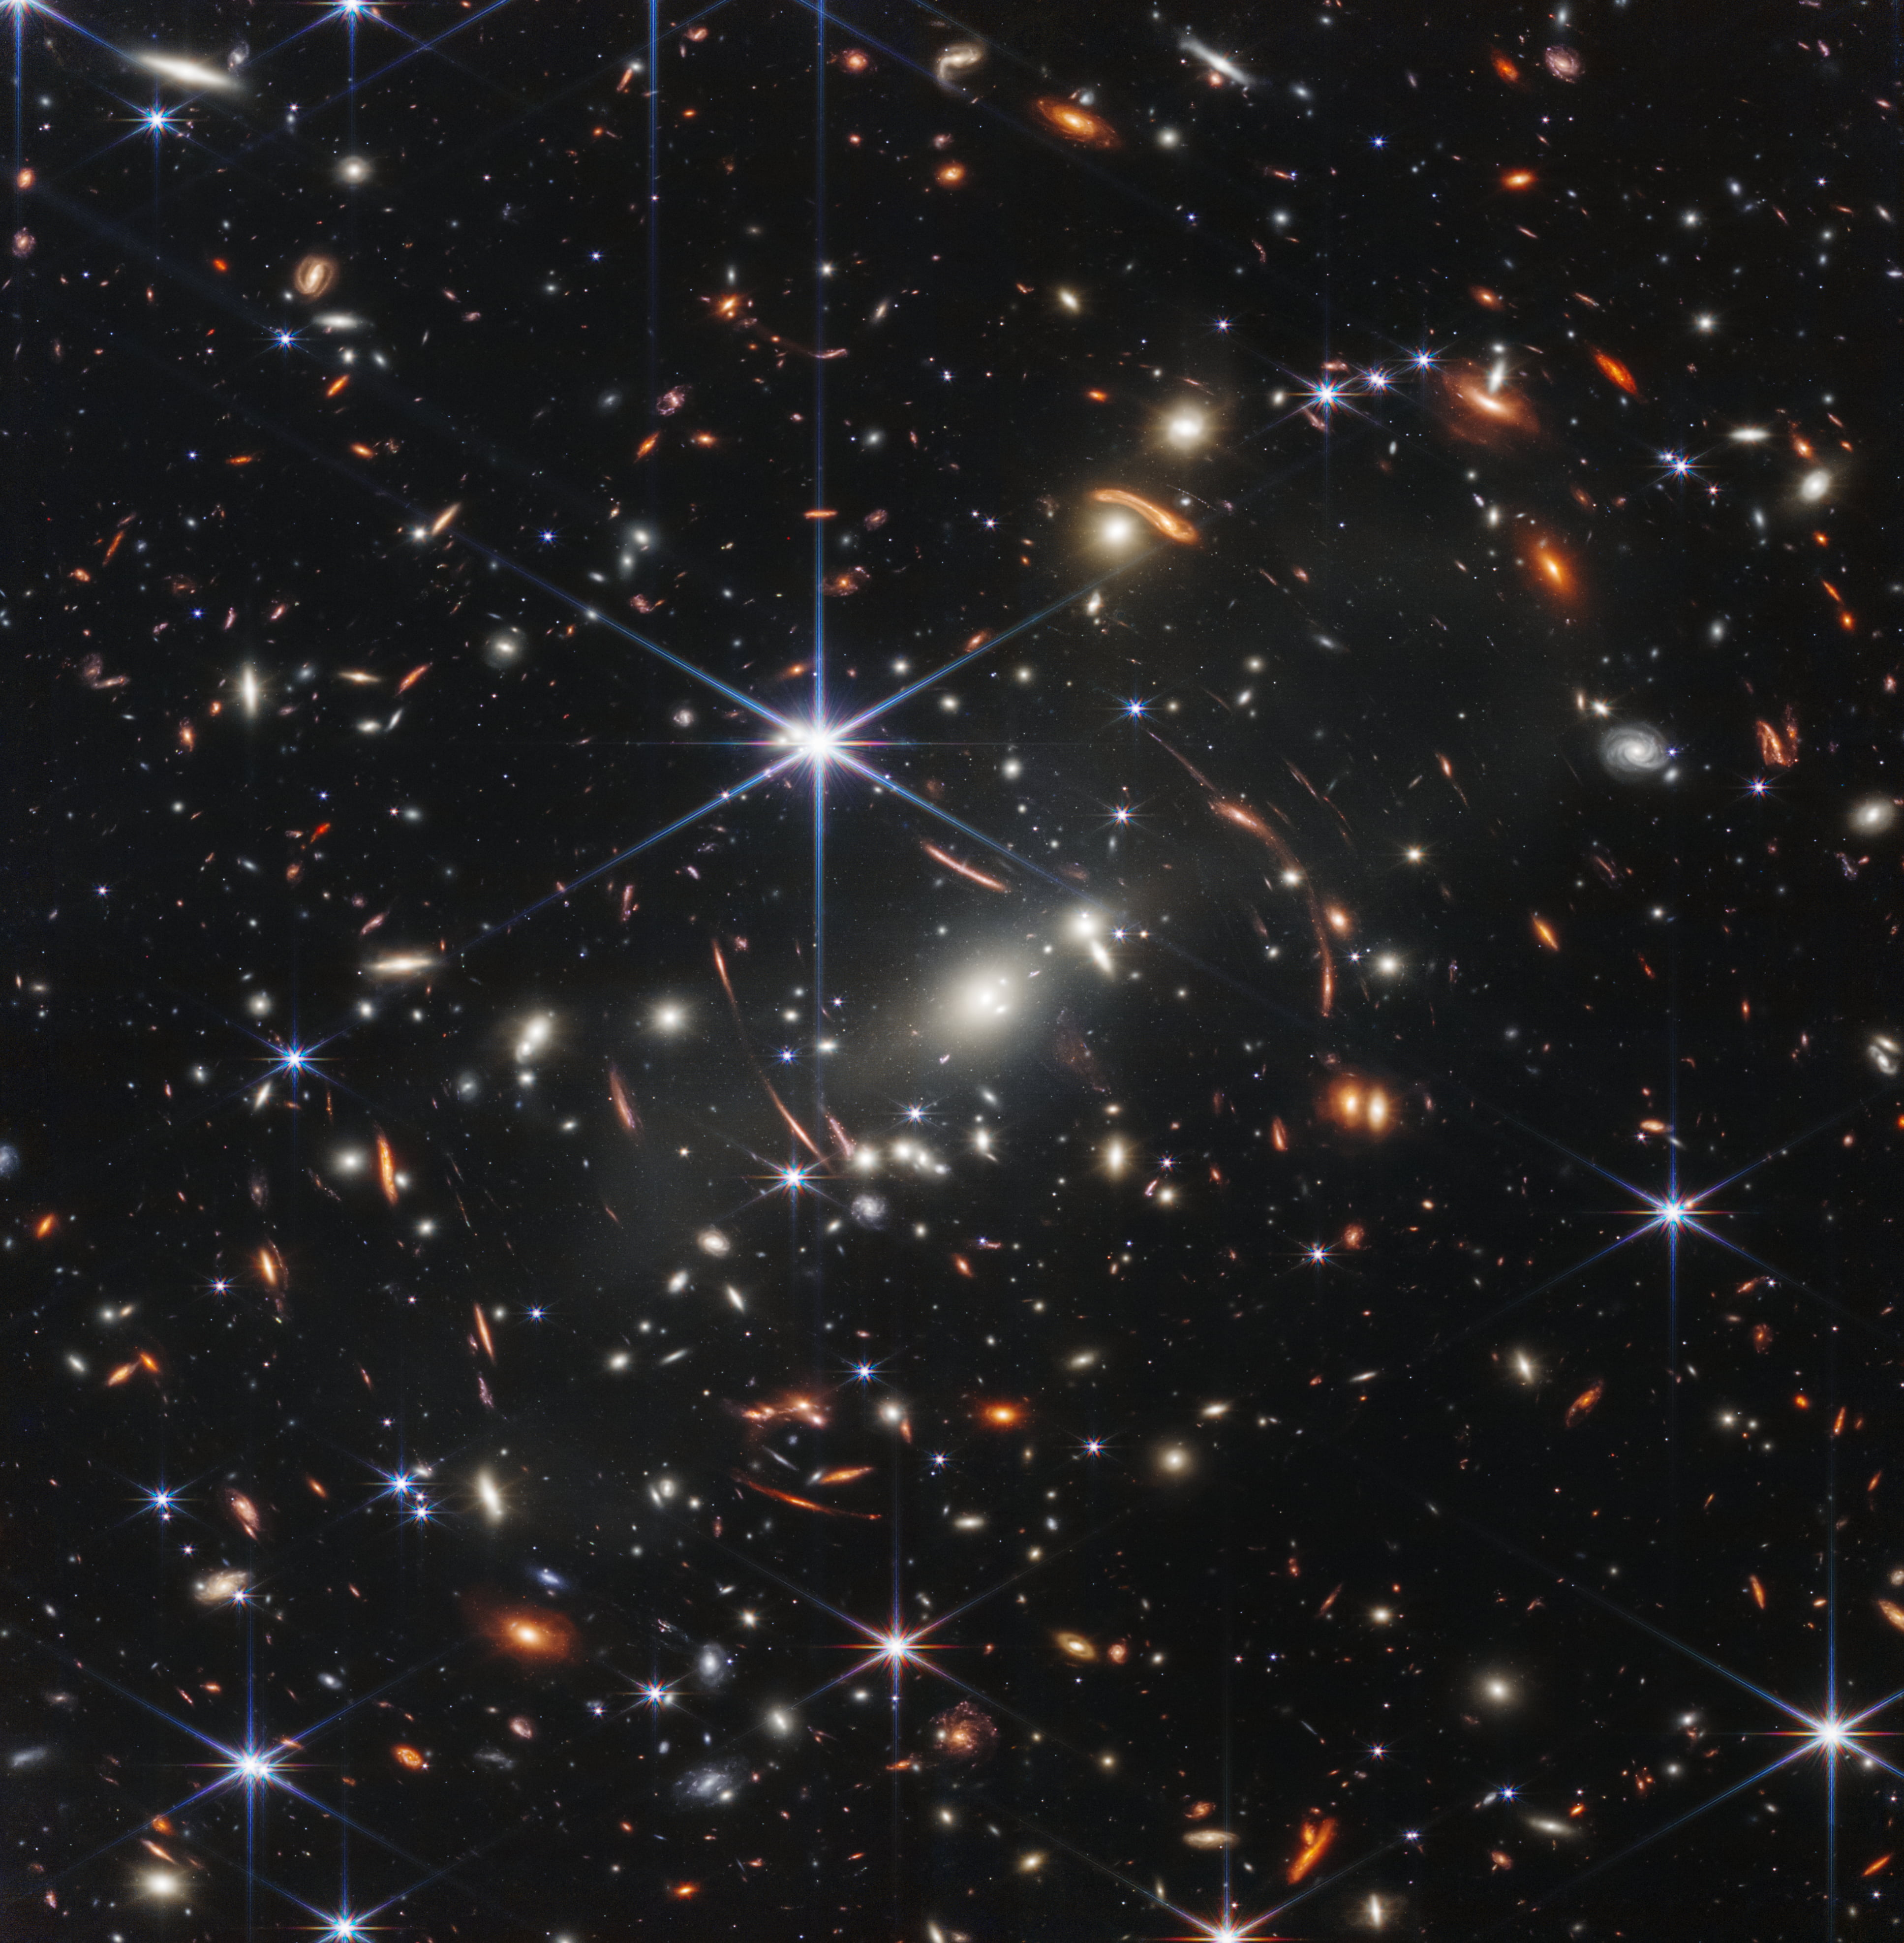 SMACS 0723, James Webb Space Telescope, stars, galaxy